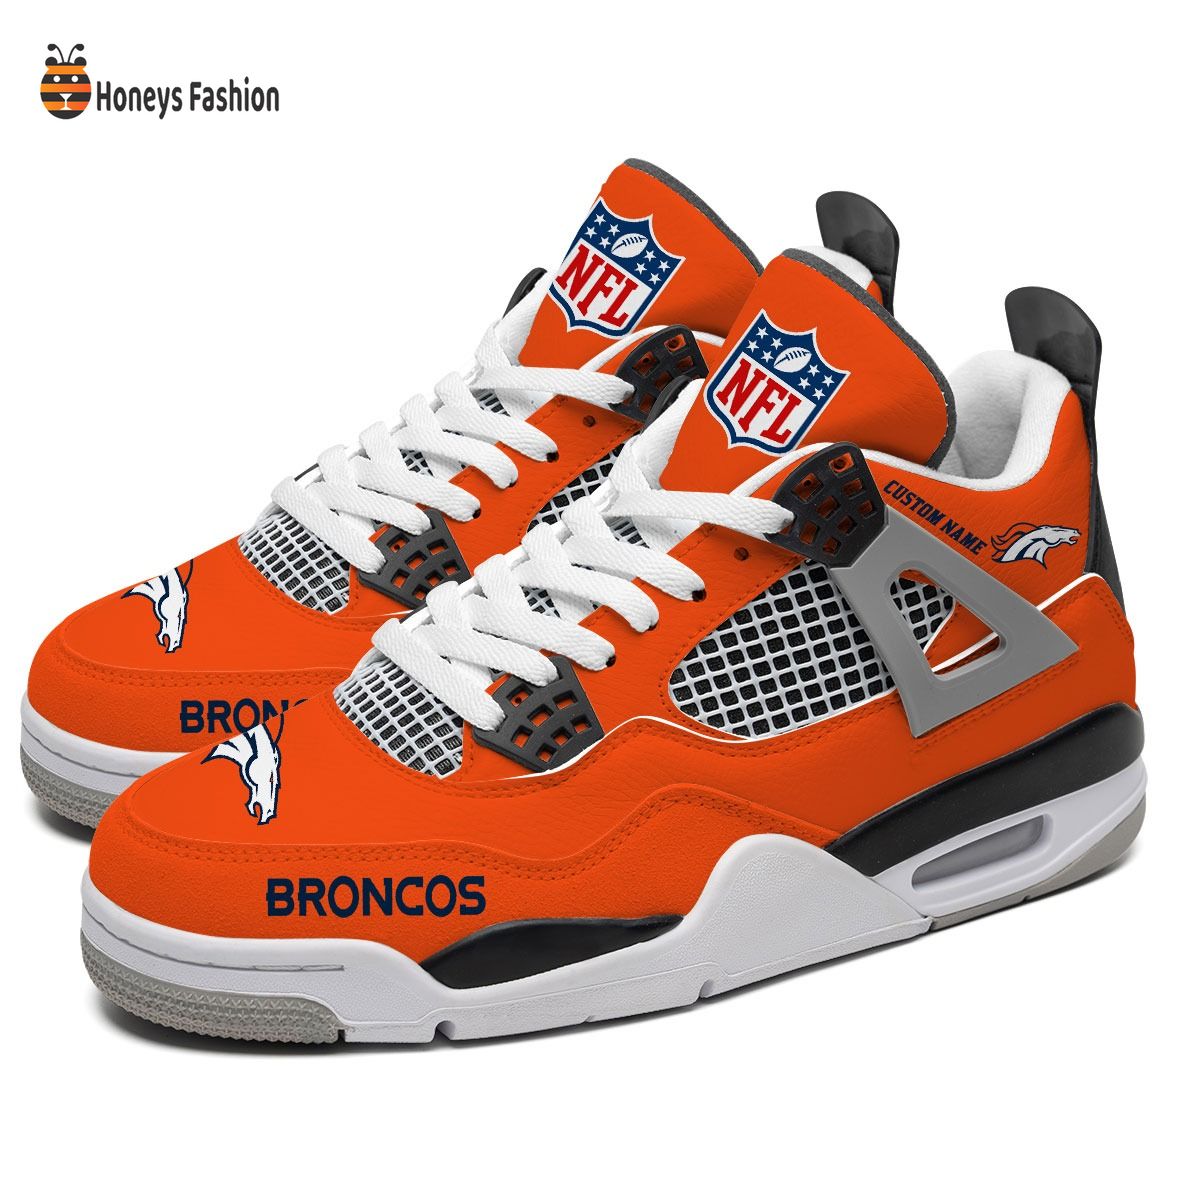 Denver Broncos NFL Air Jordan 4 Shoes